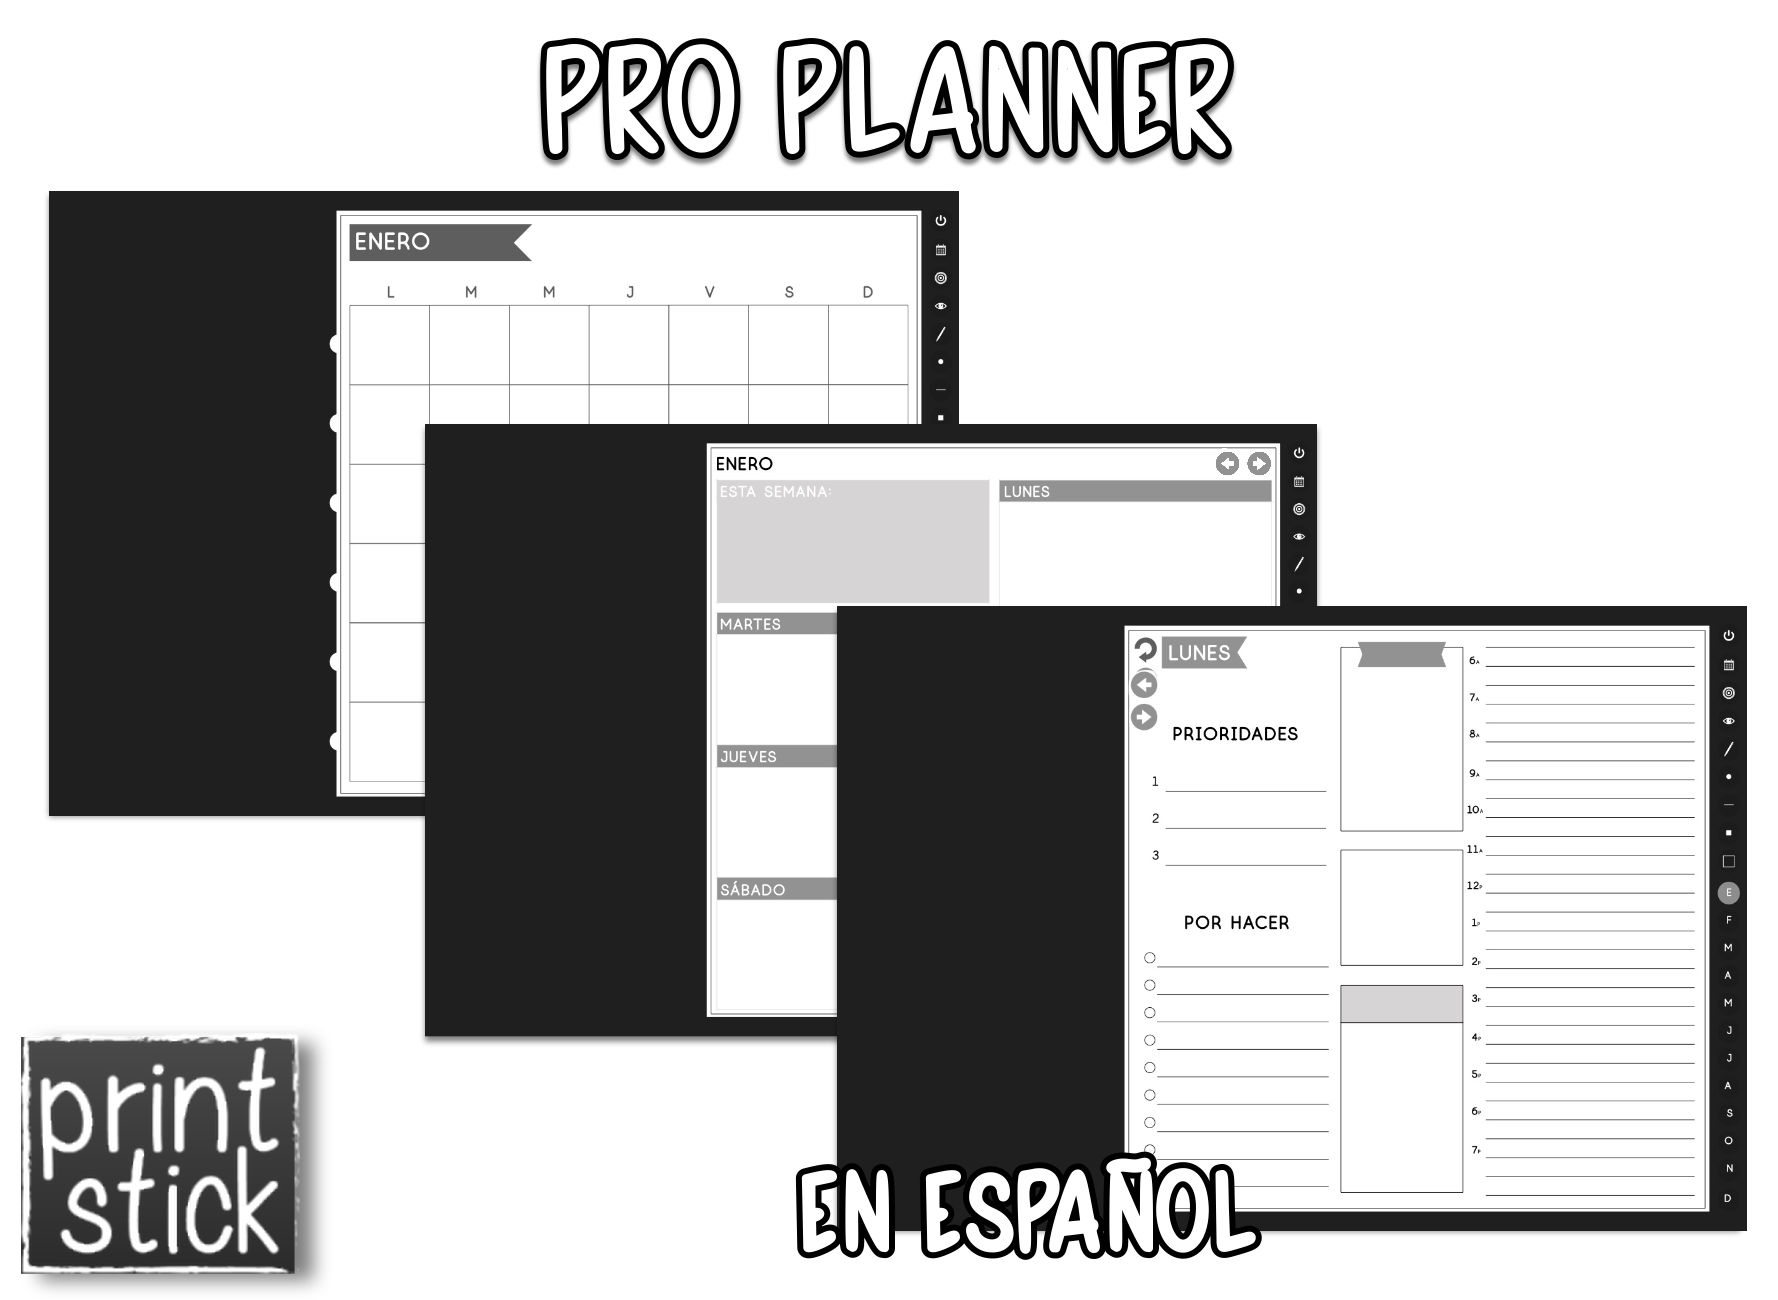 En Español: Agenda Digital Pro Planner - Print Stick